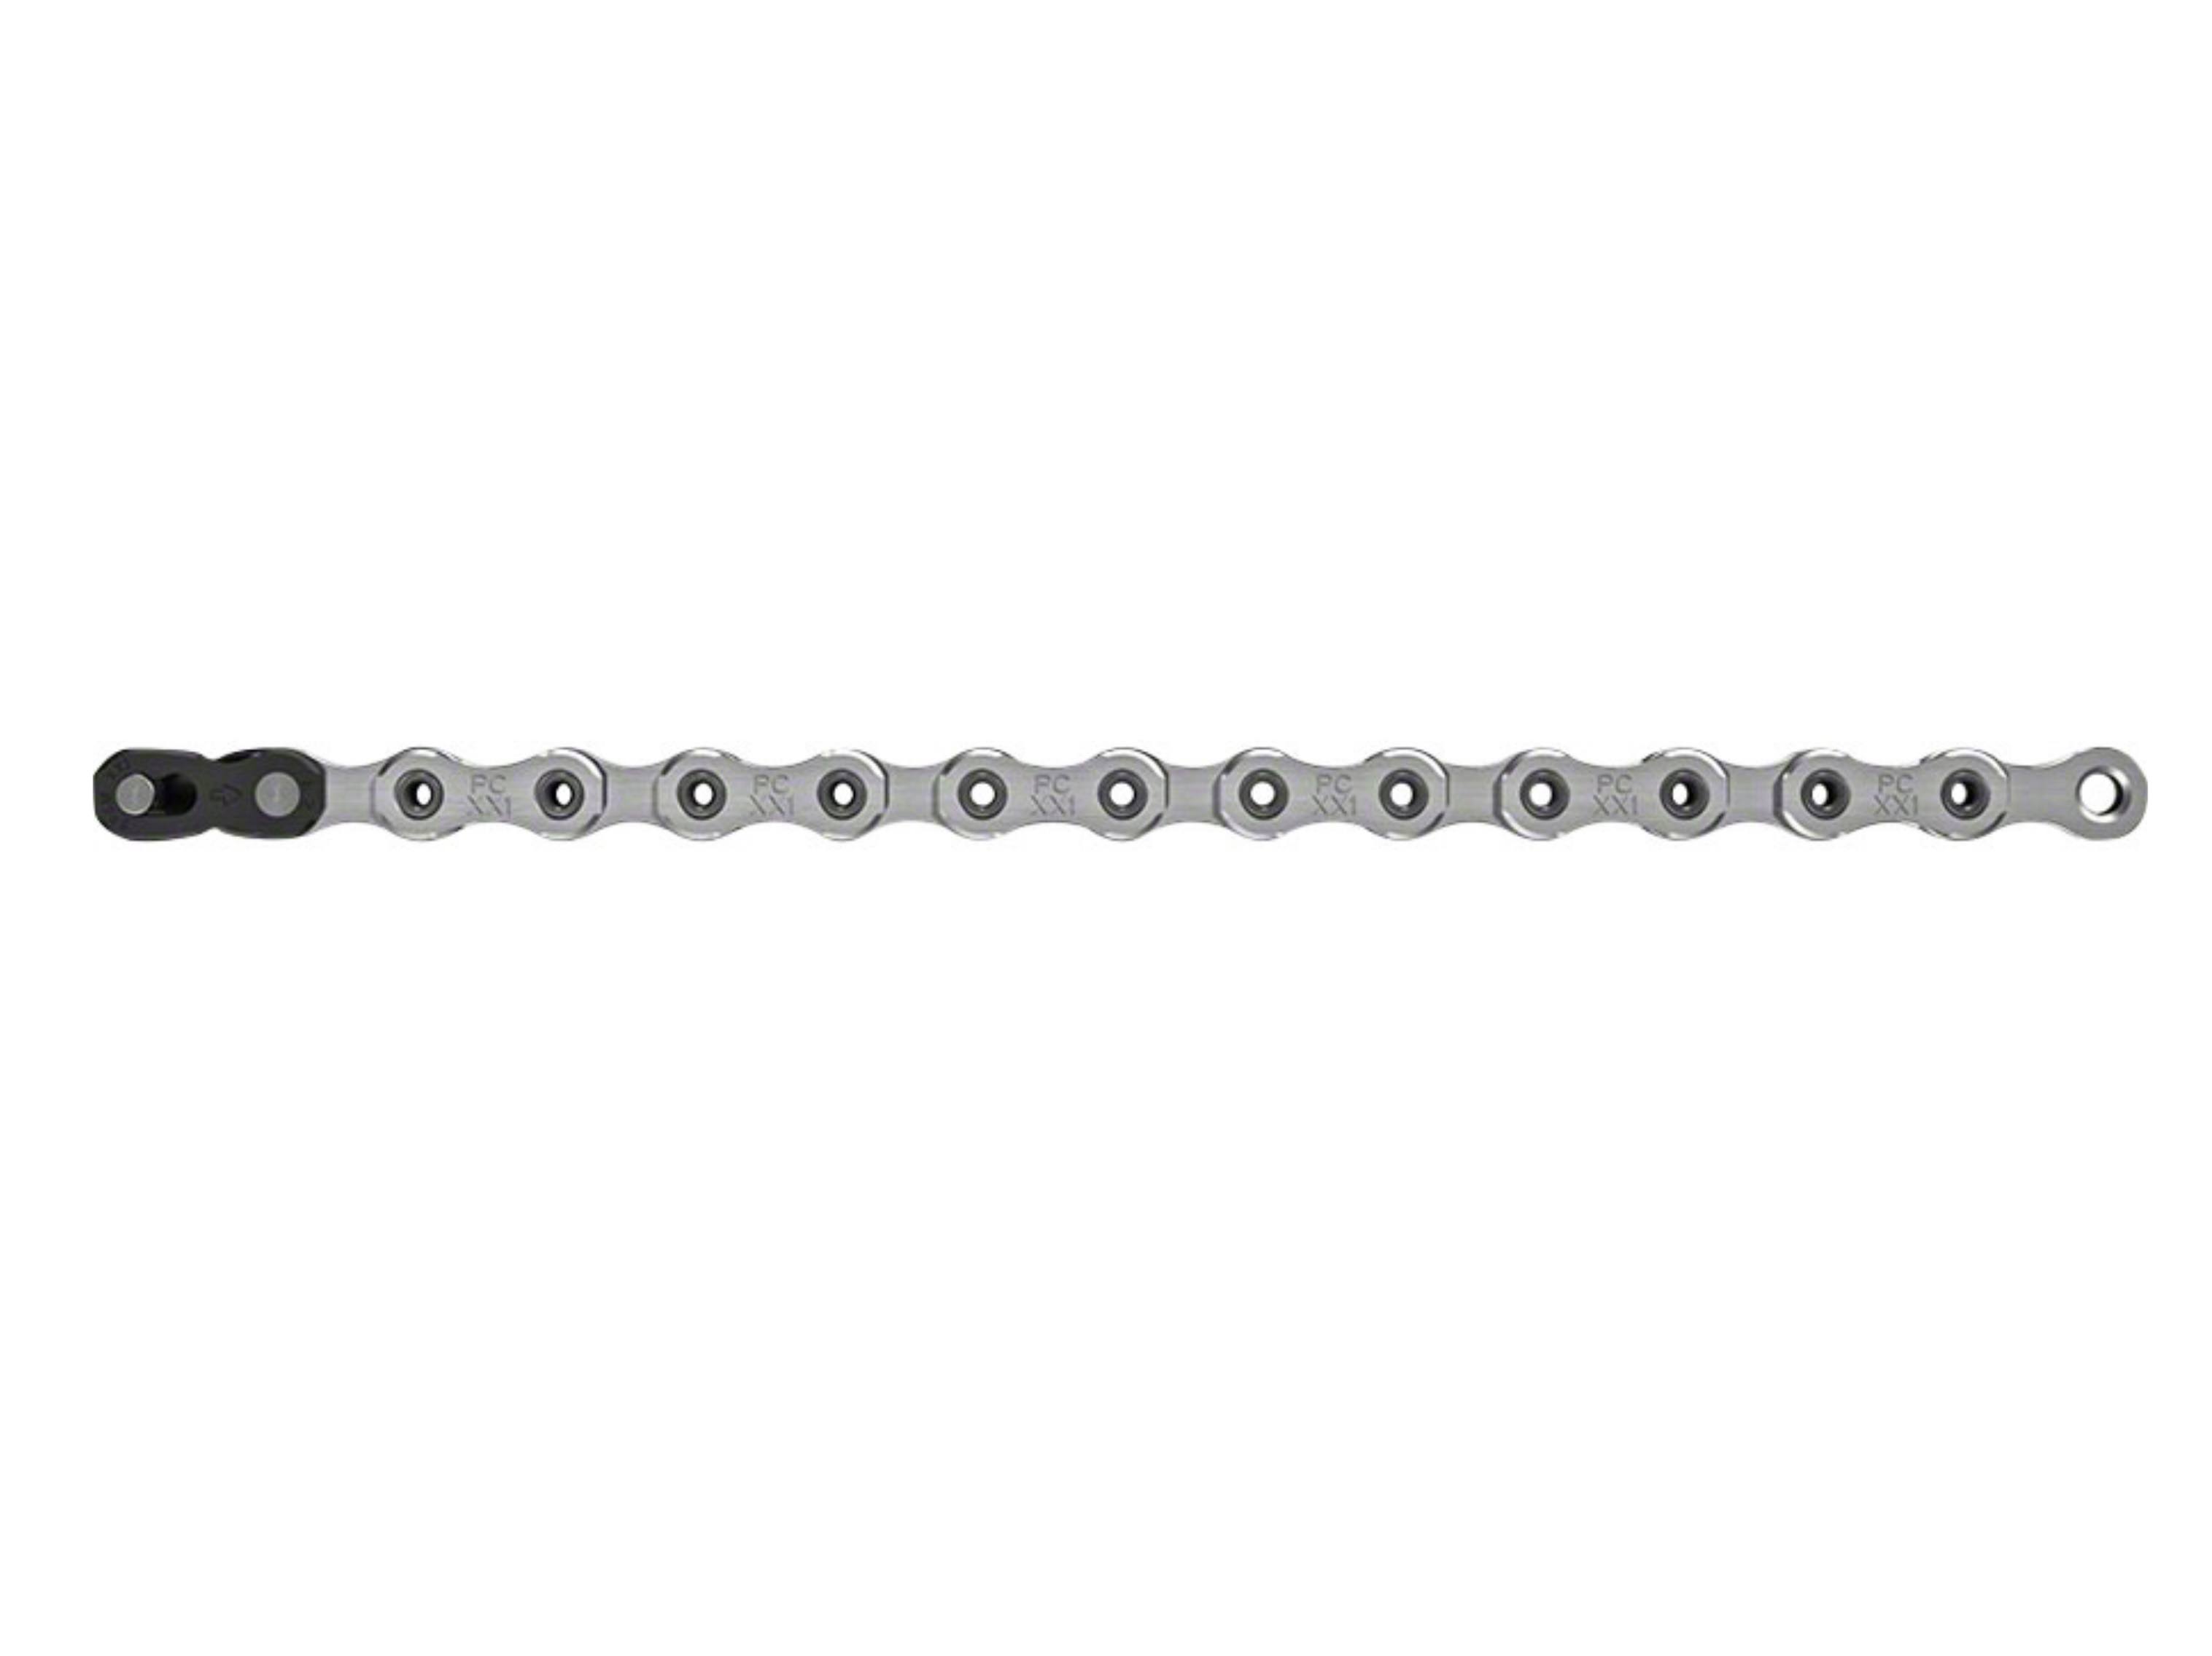 Sram XX1 Hollow Pin Bike Chain - 11 Speed, Silver, 118 Link with PowerLock